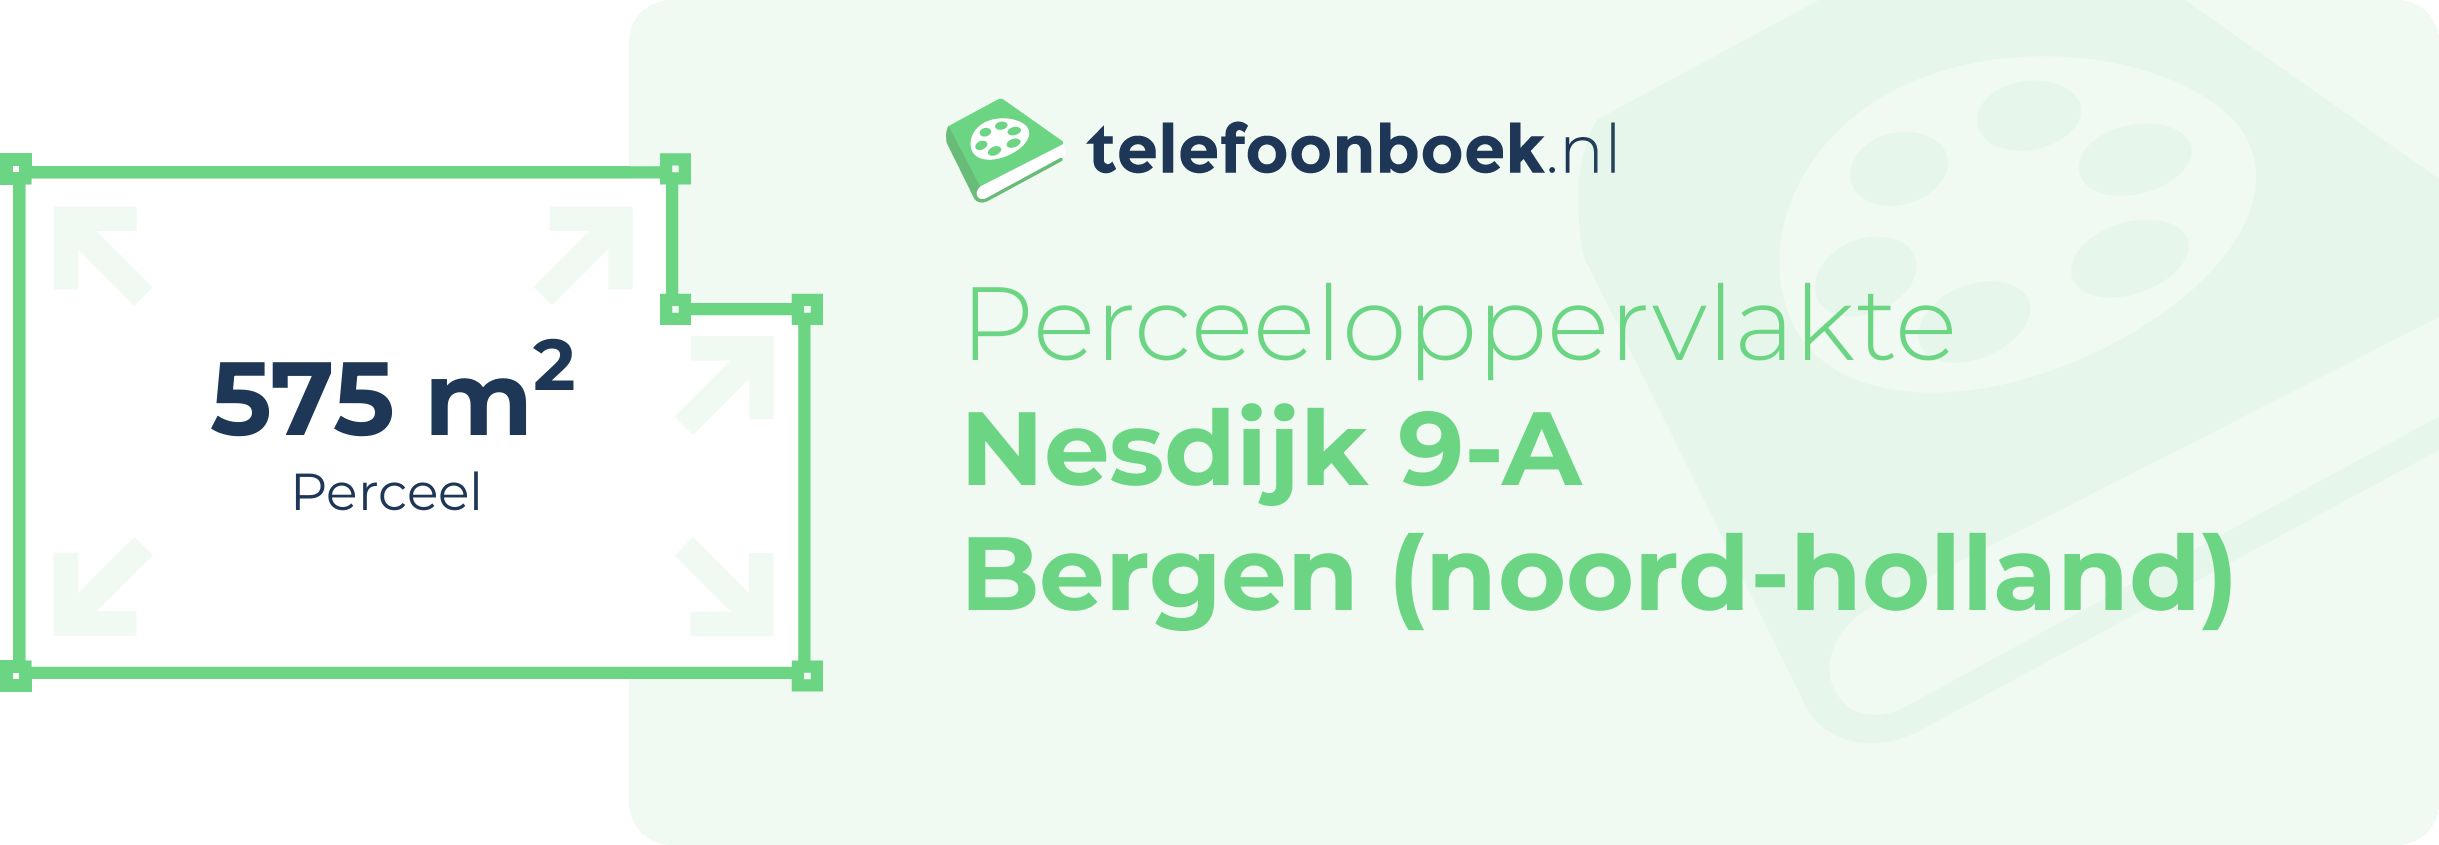 Perceeloppervlakte Nesdijk 9-A Bergen (Noord-Holland)